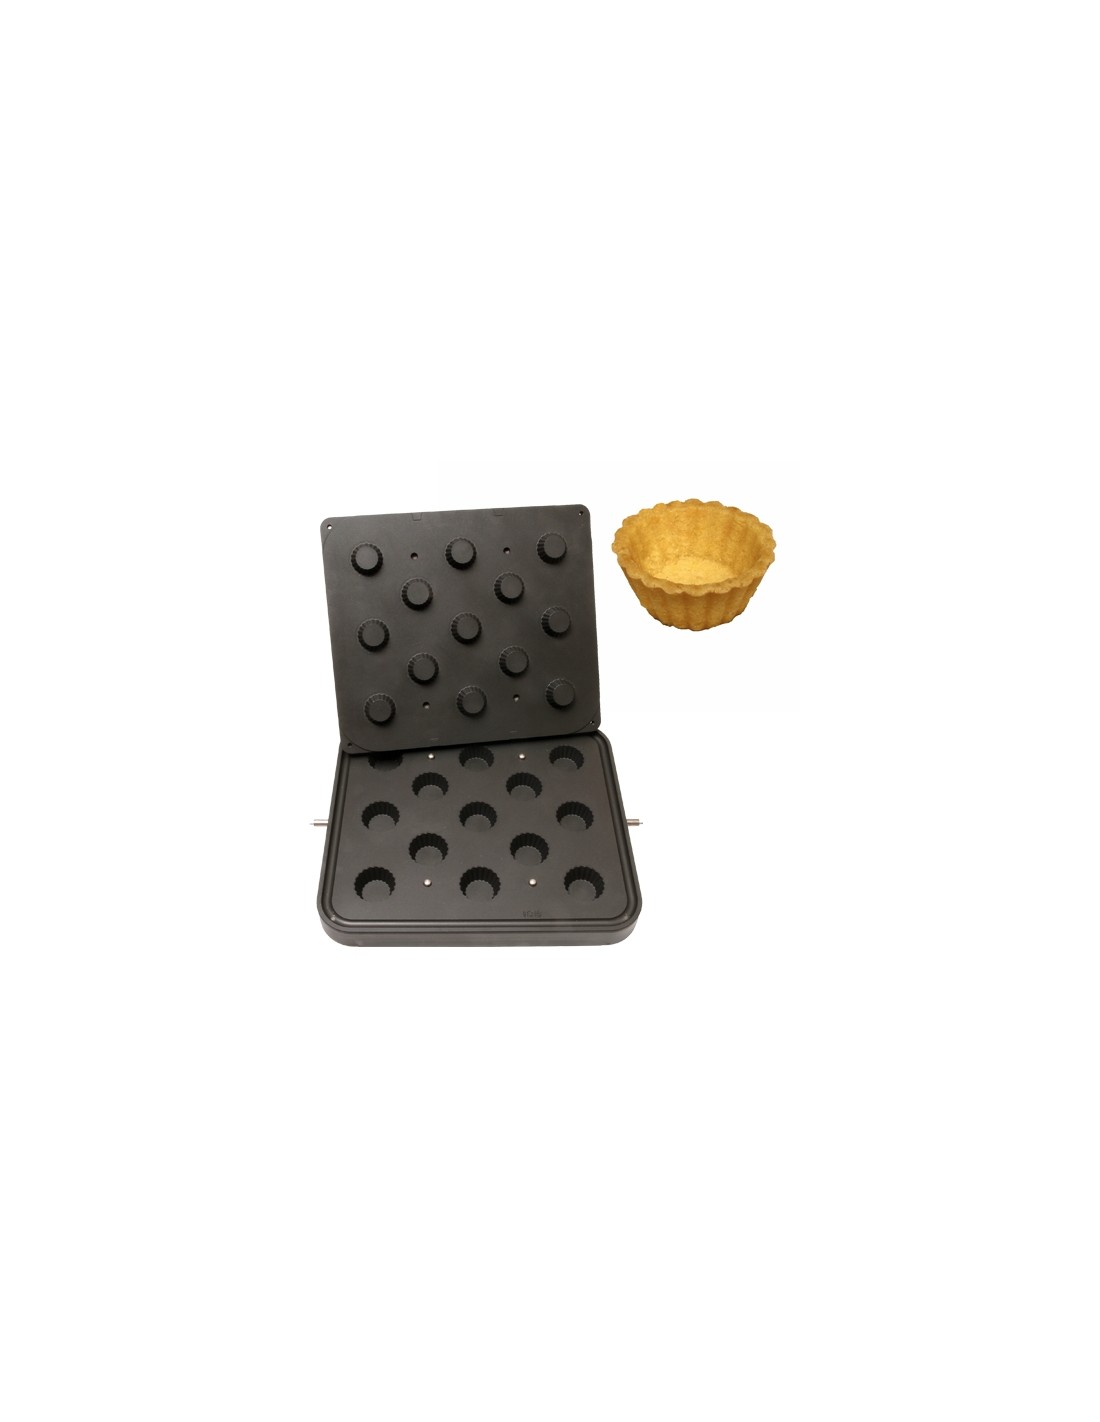 Cupcake plate - mm Ø sup 50 - inf 35 - h 21 - side 4-5 - bottom 4 - Impronte 13